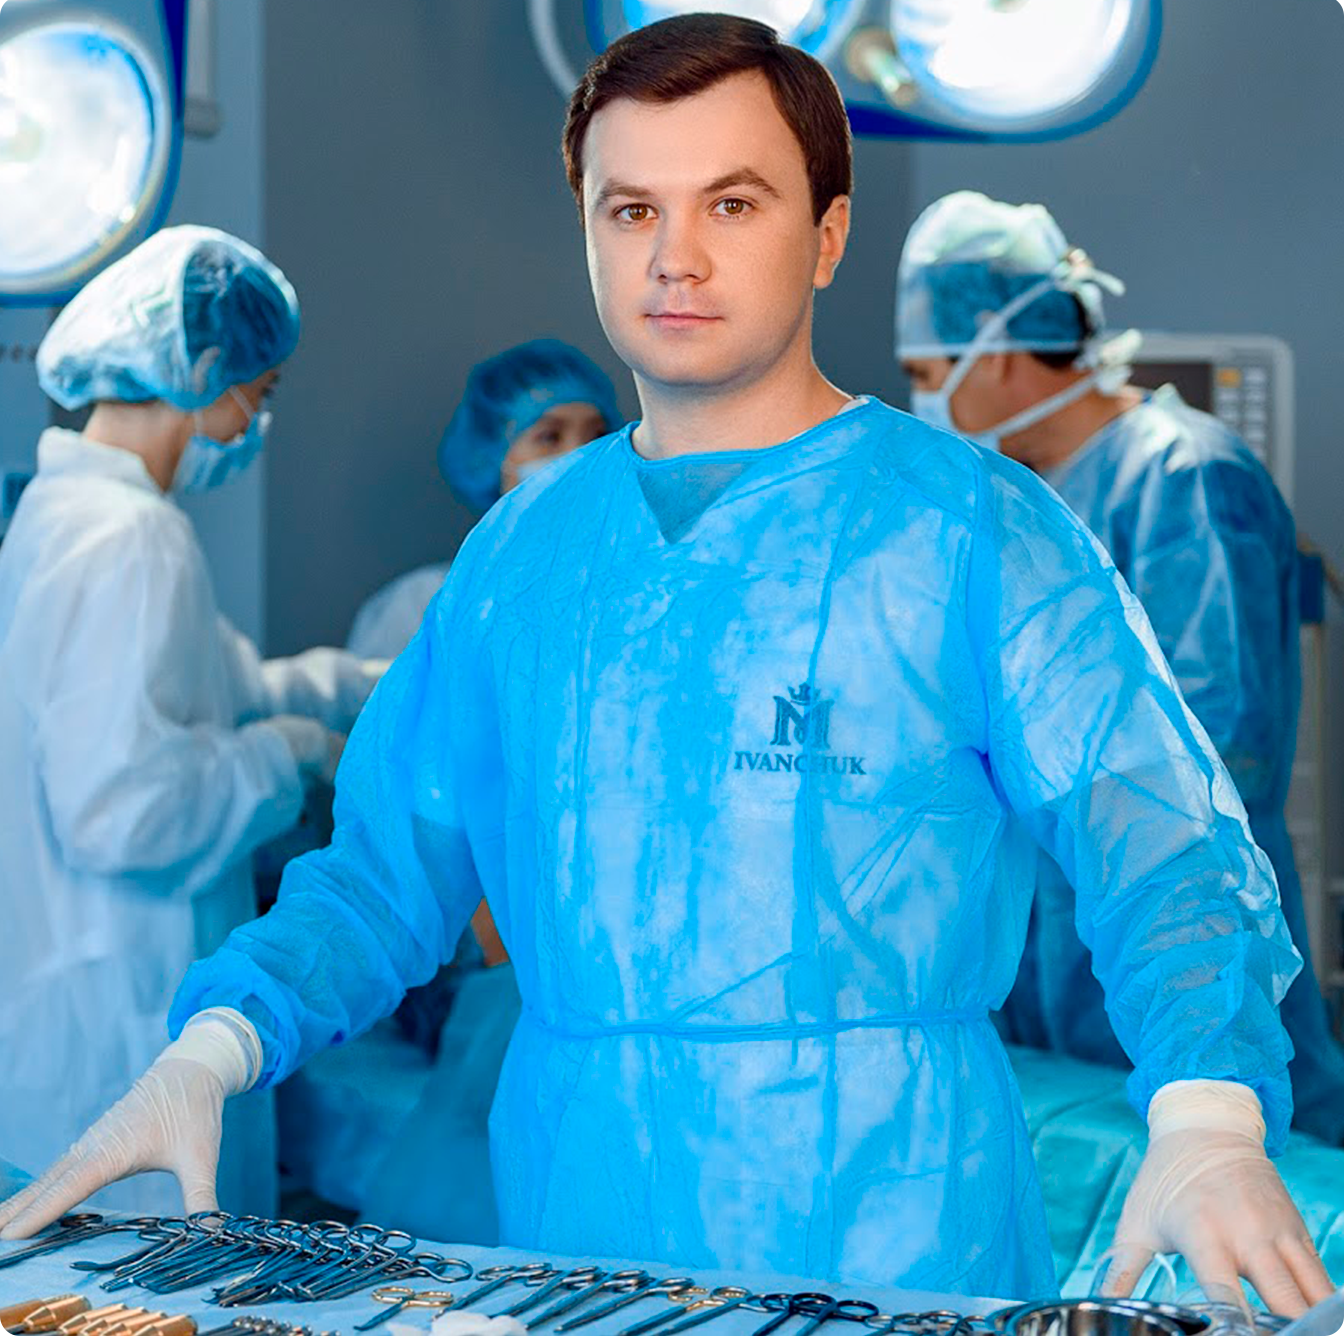 Доктор Иванчук пластический хирург.